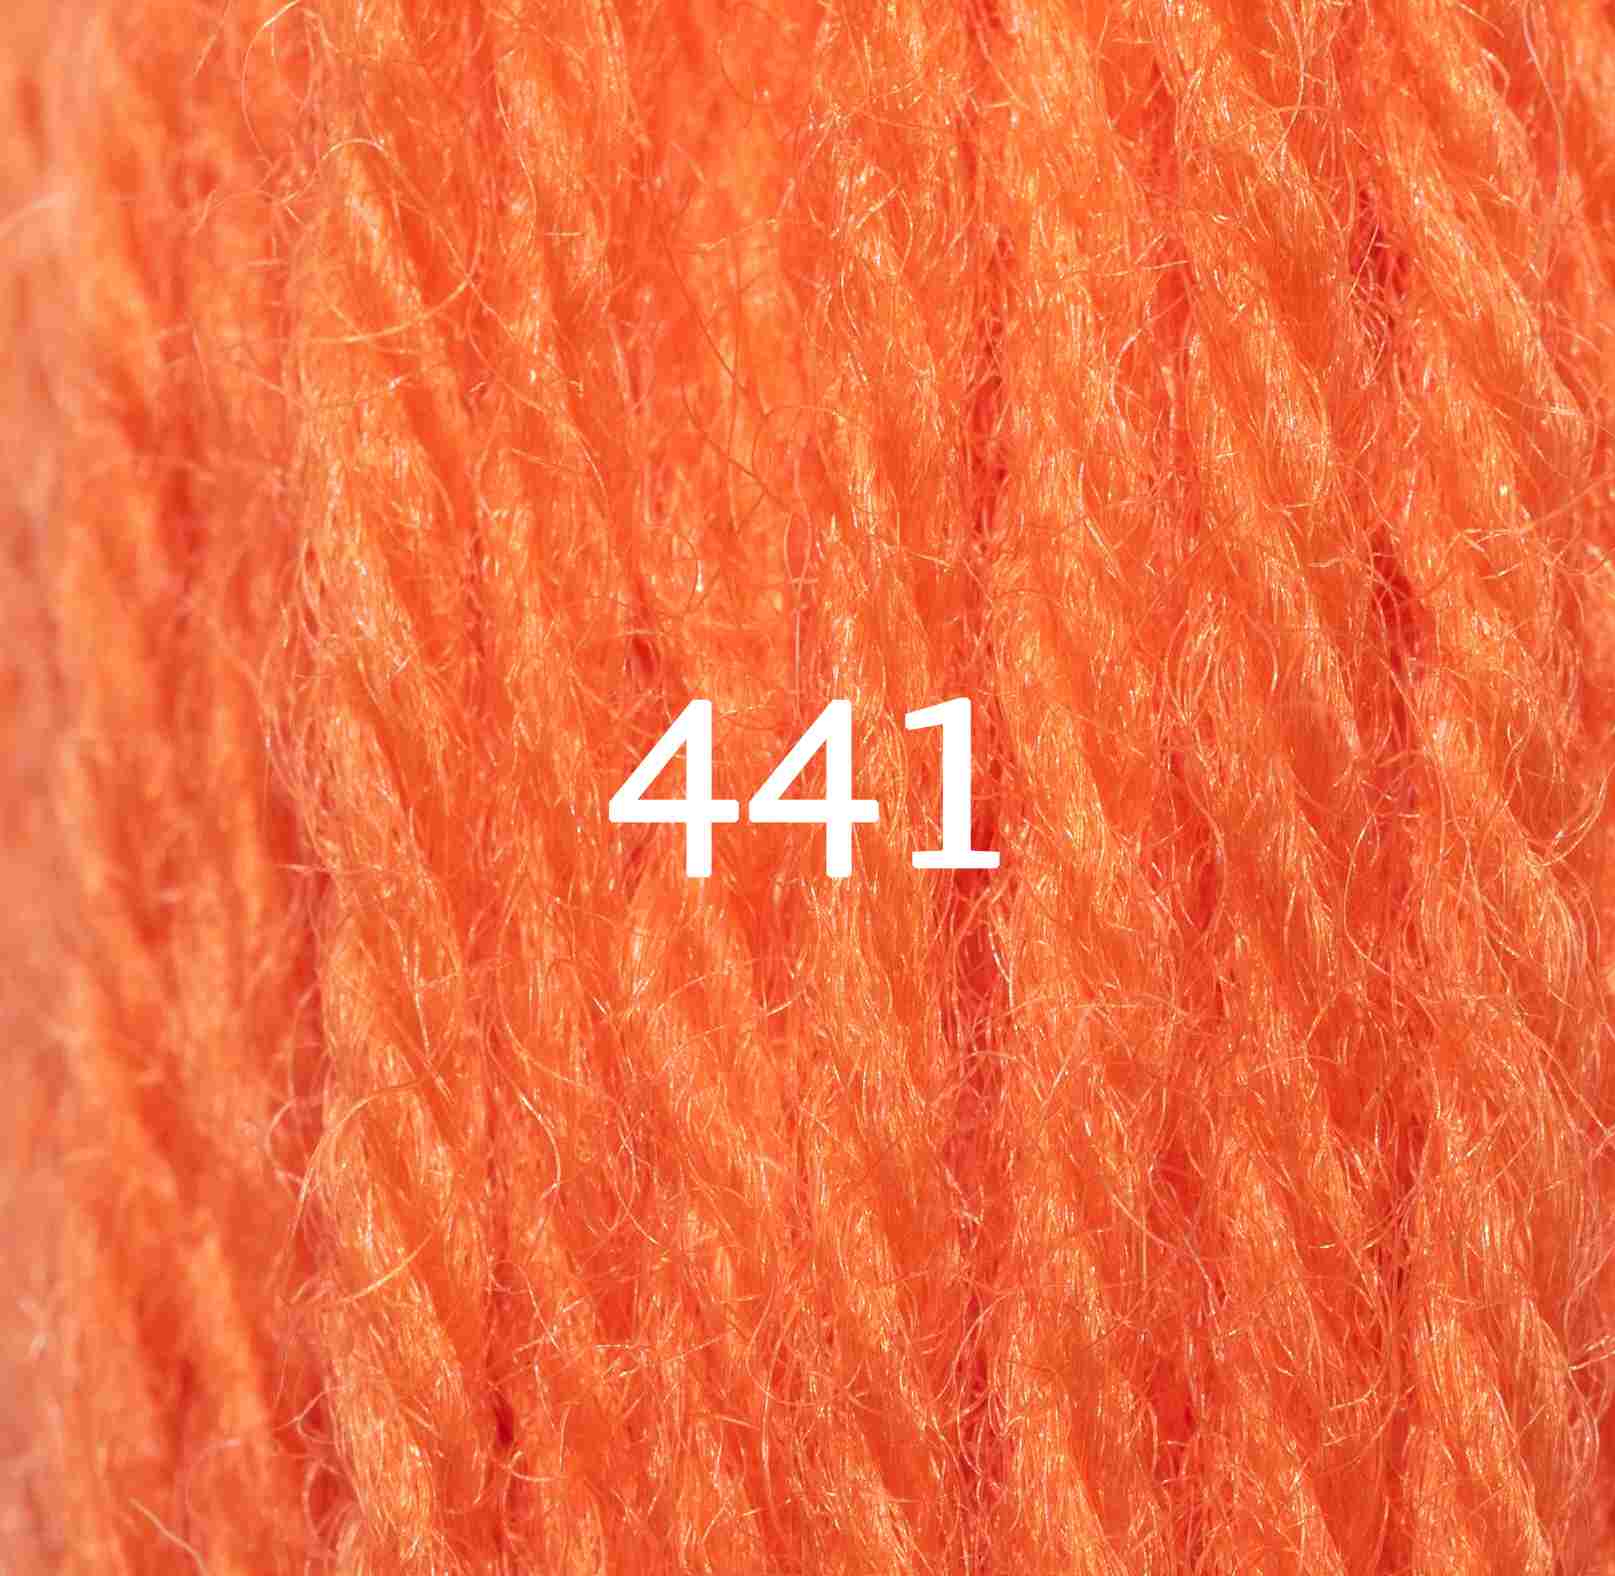 Tapestry - 440 Range (Orange Red)